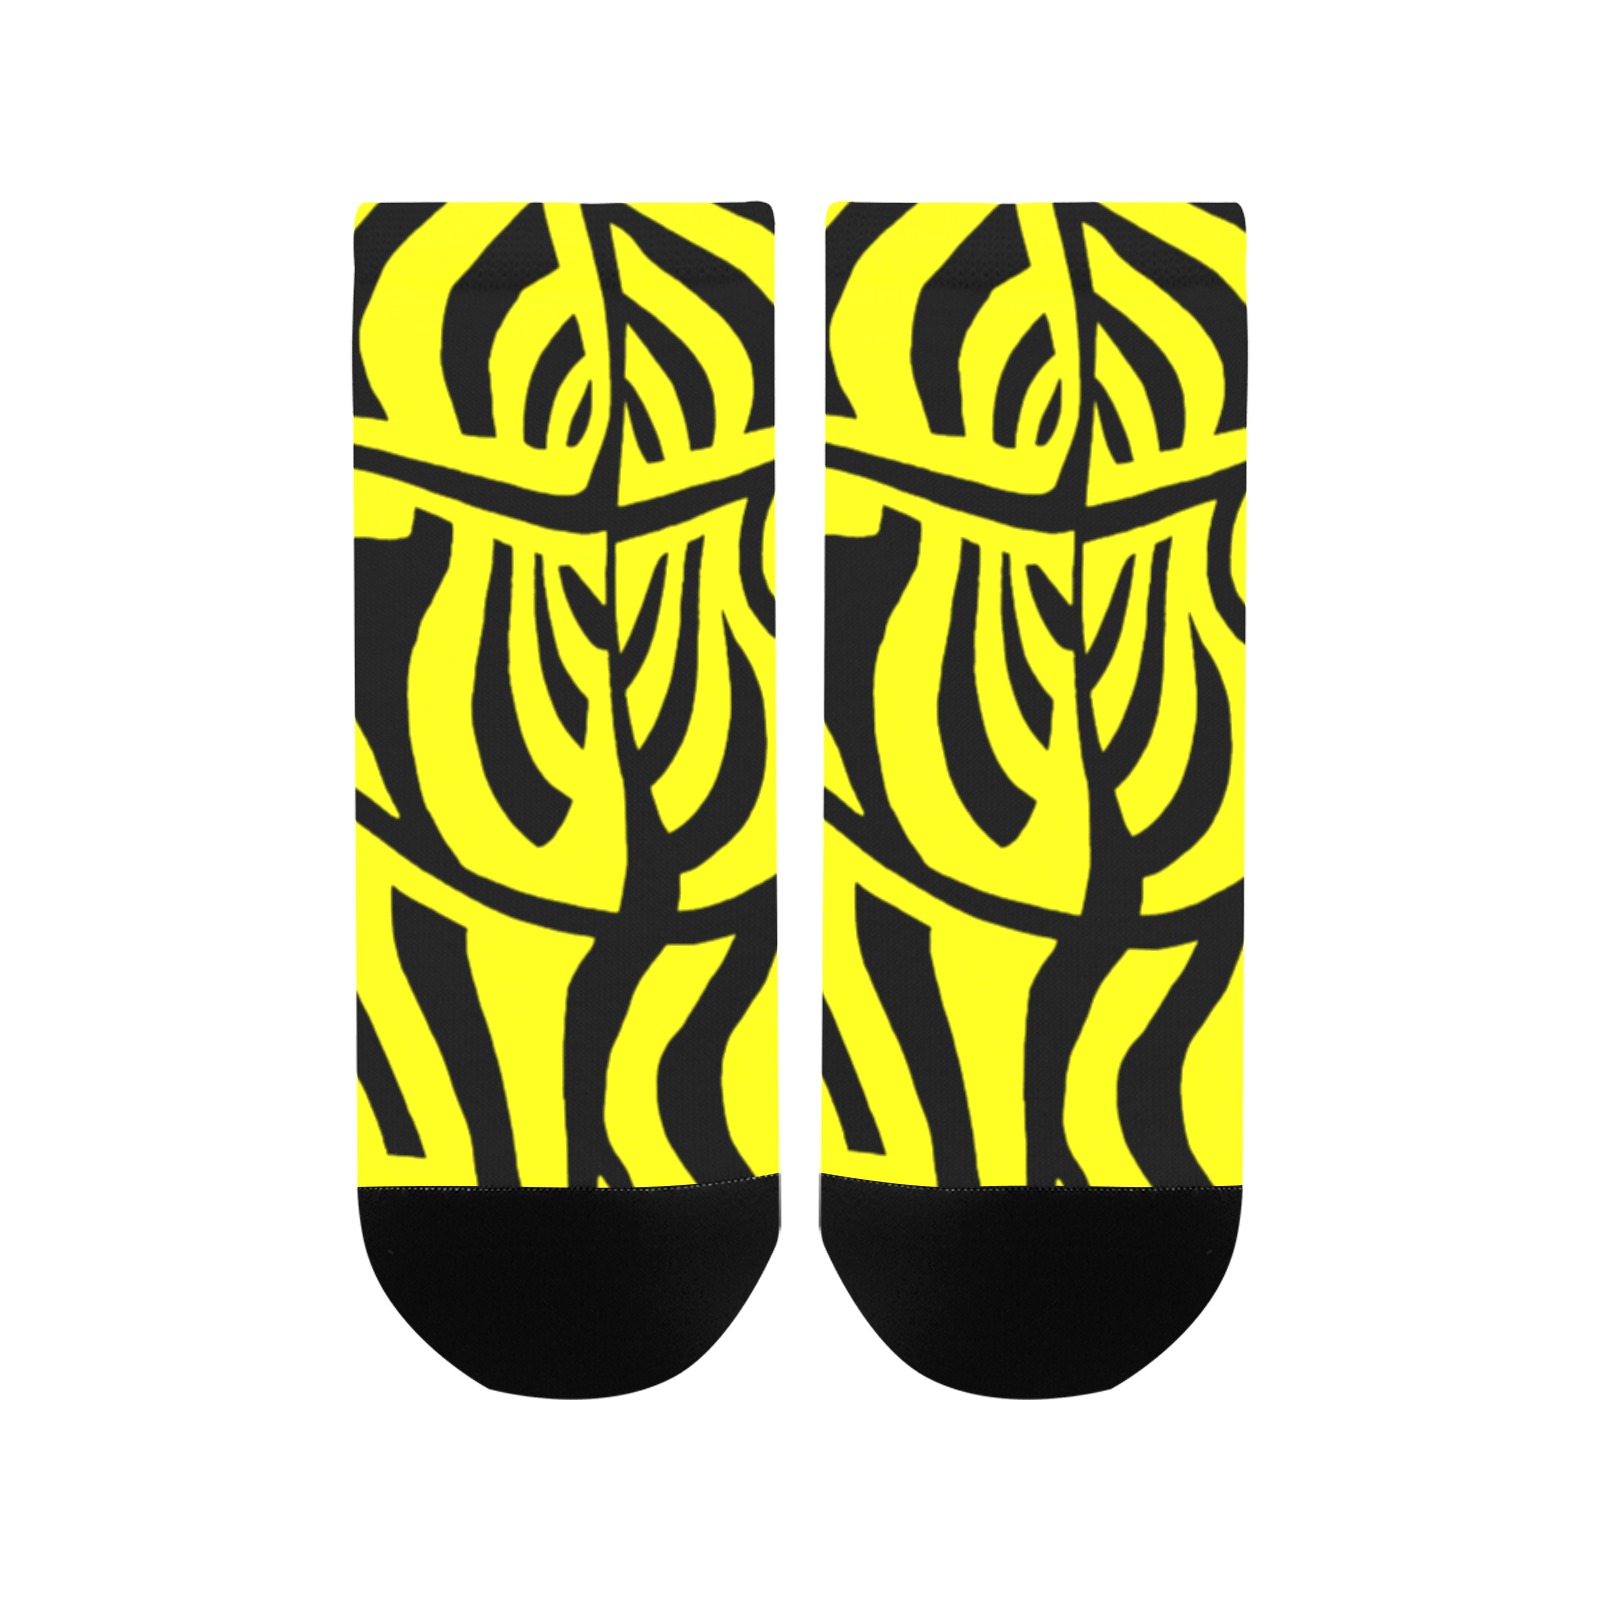 aaa yellow Women's Ankle Socks